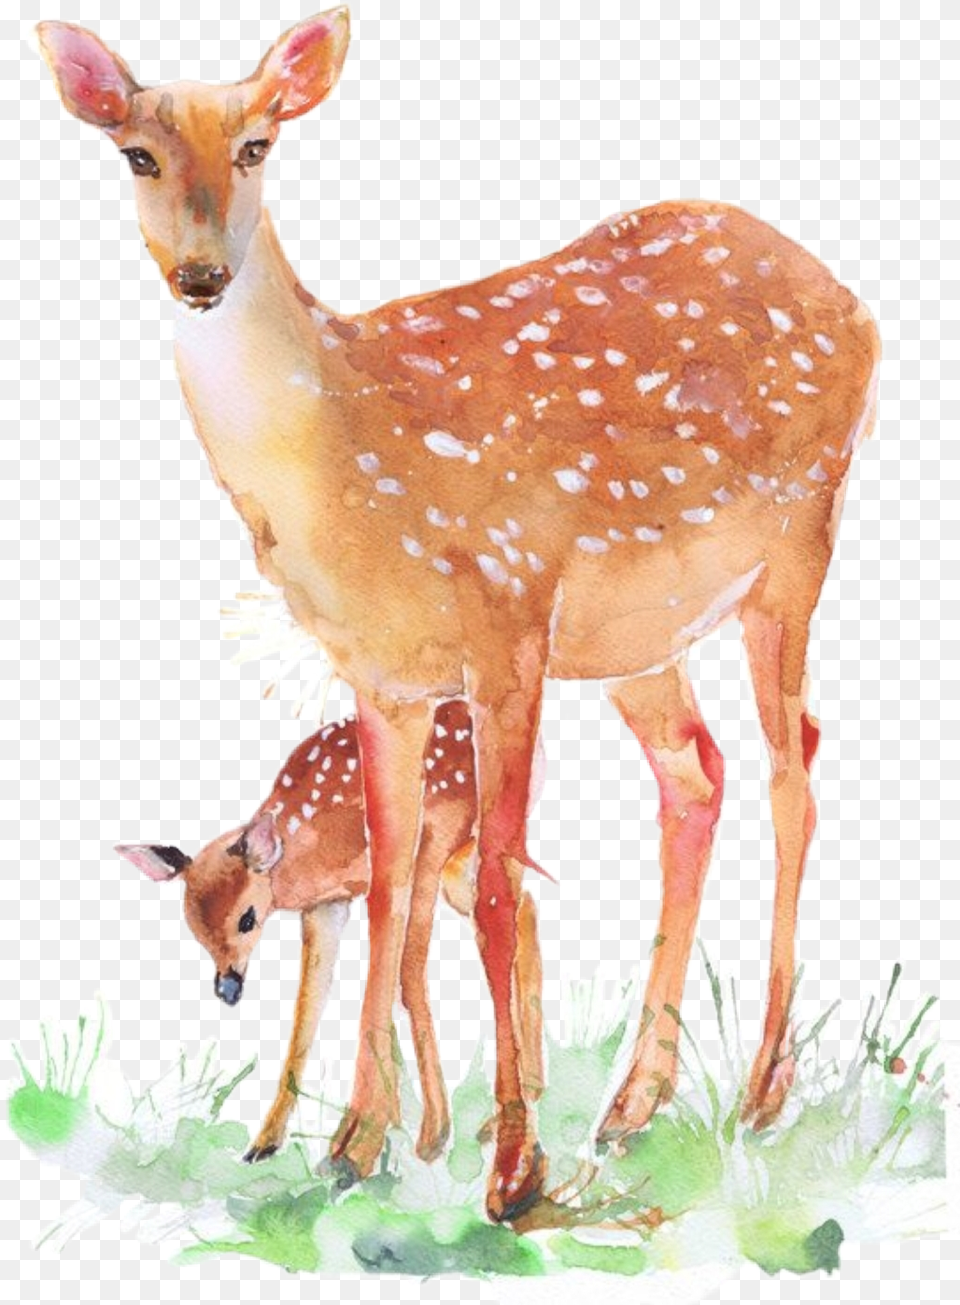 Fawn Doe Deer Babydeer Forest Forestanimals Nature Natu Deer, Animal, Mammal, Wildlife, Antelope Png Image